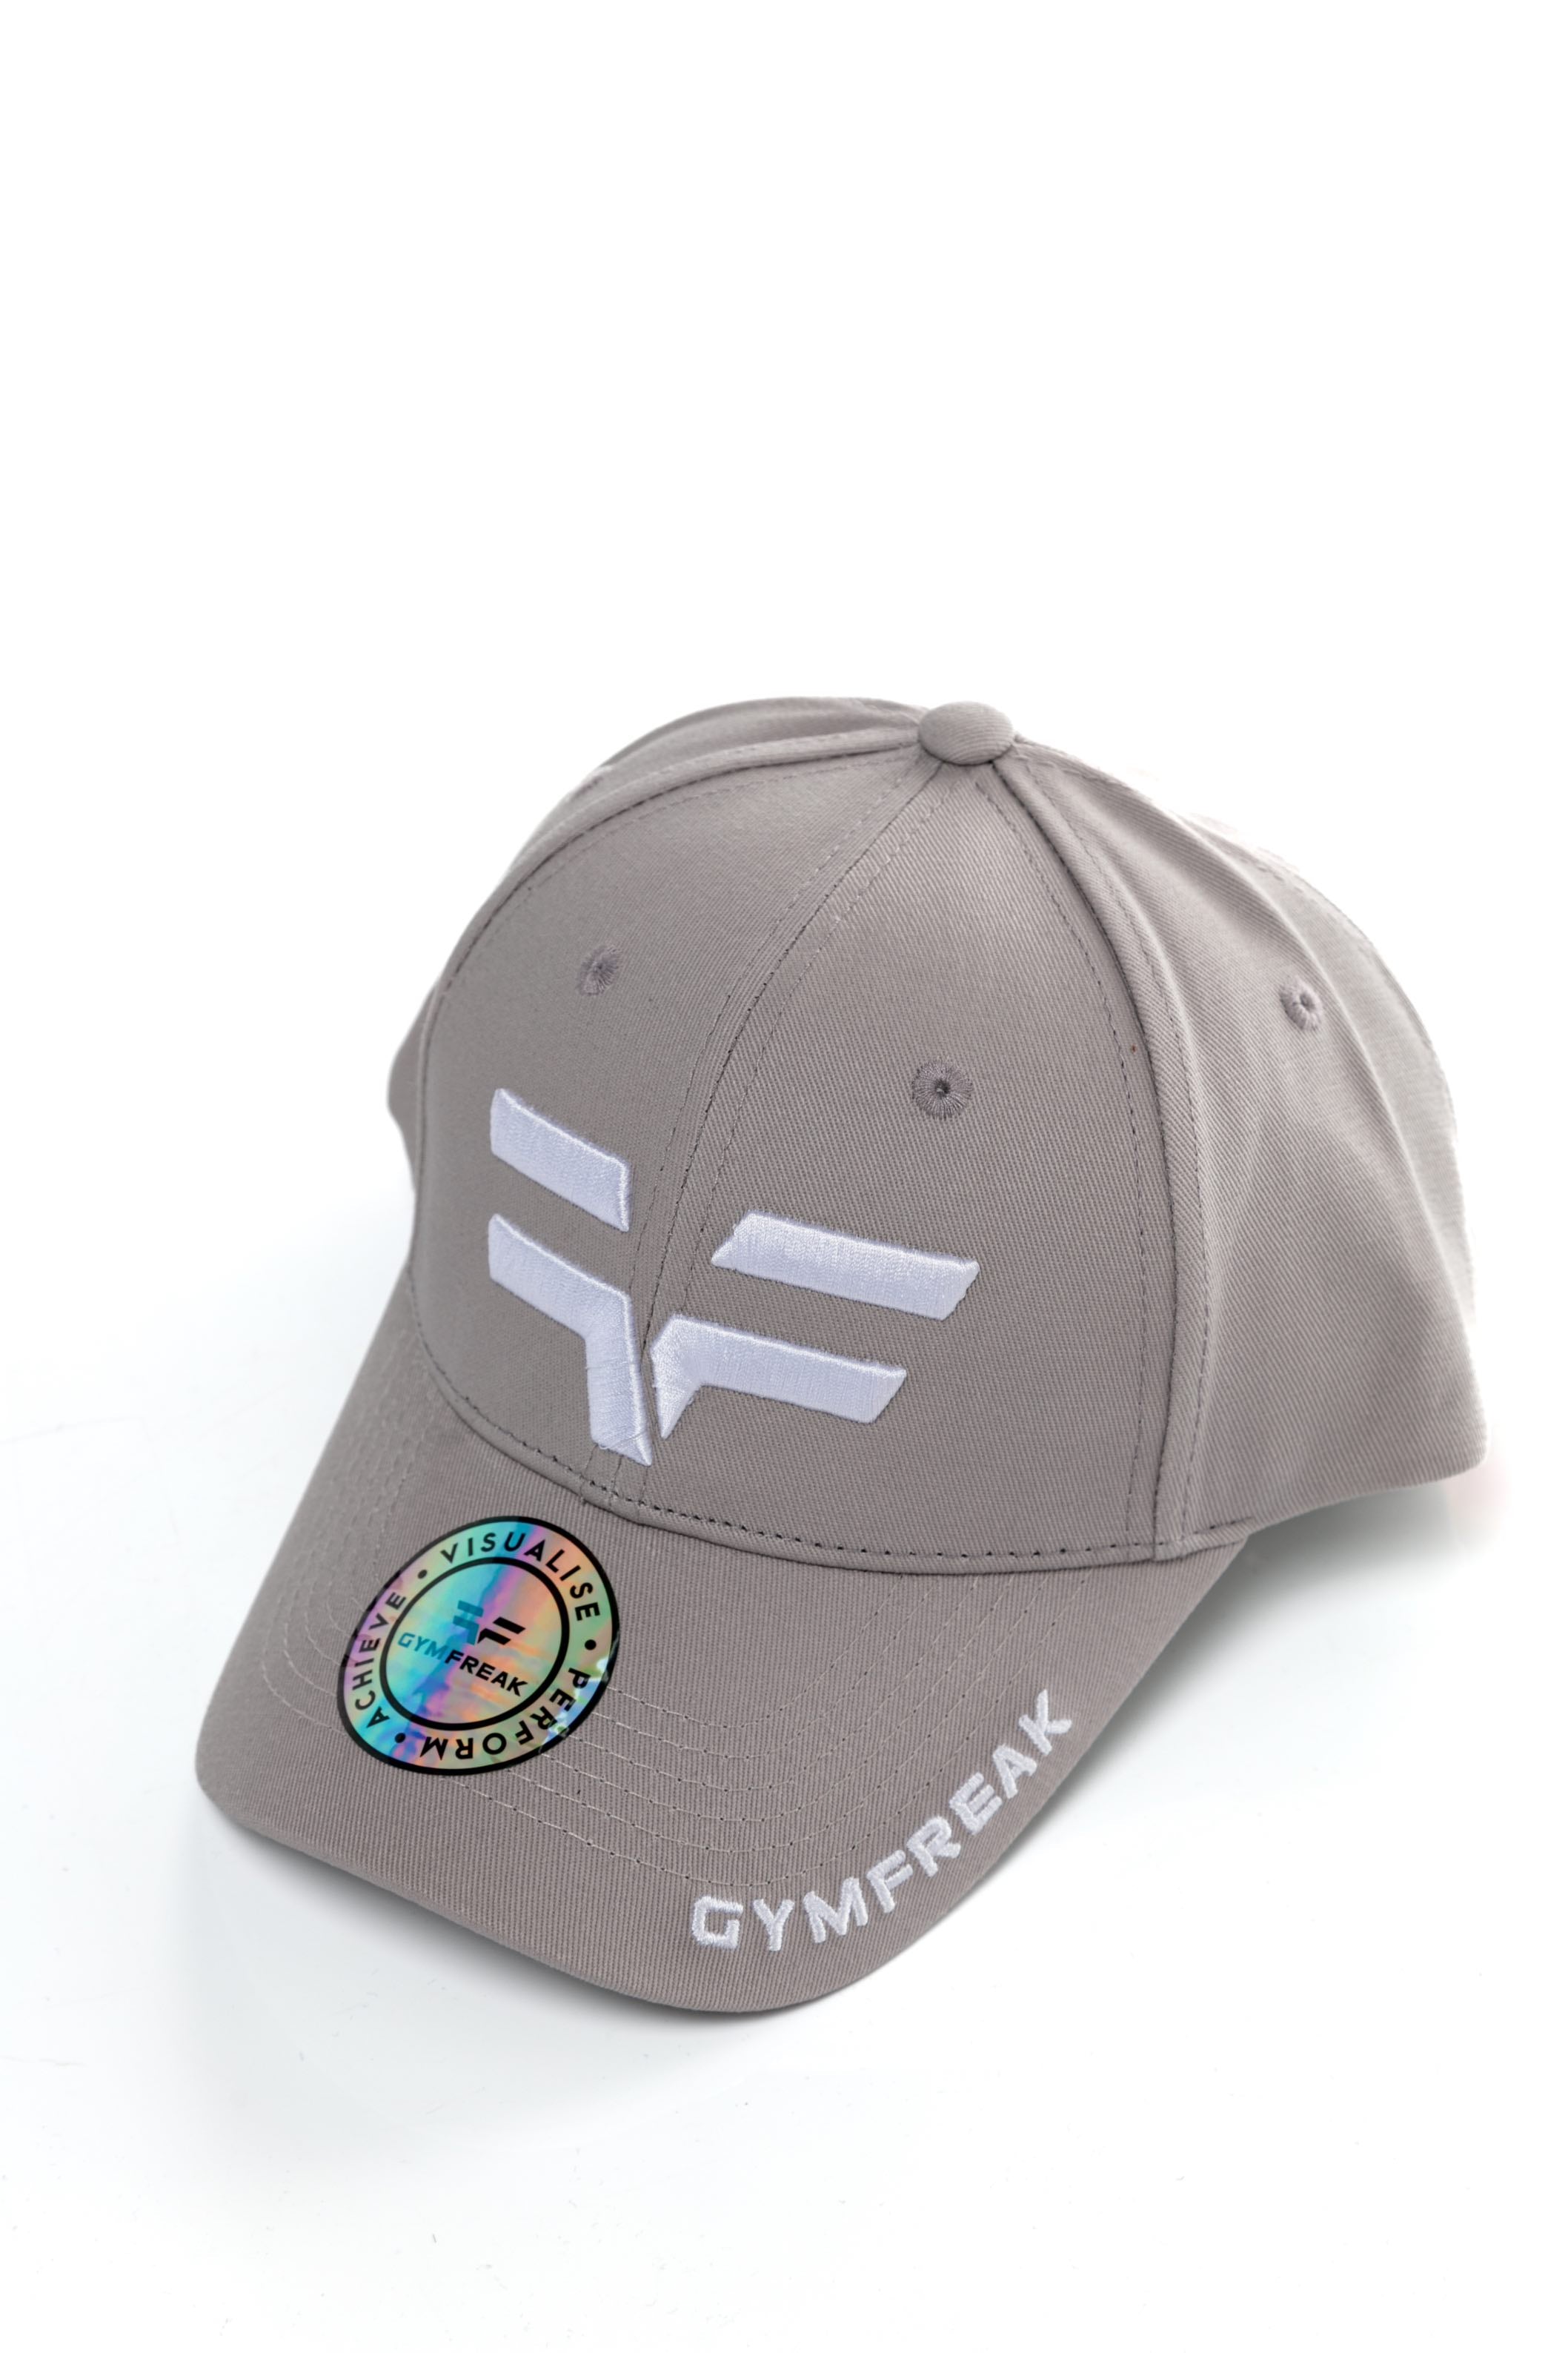 GymFreak Pro Cap - Grey